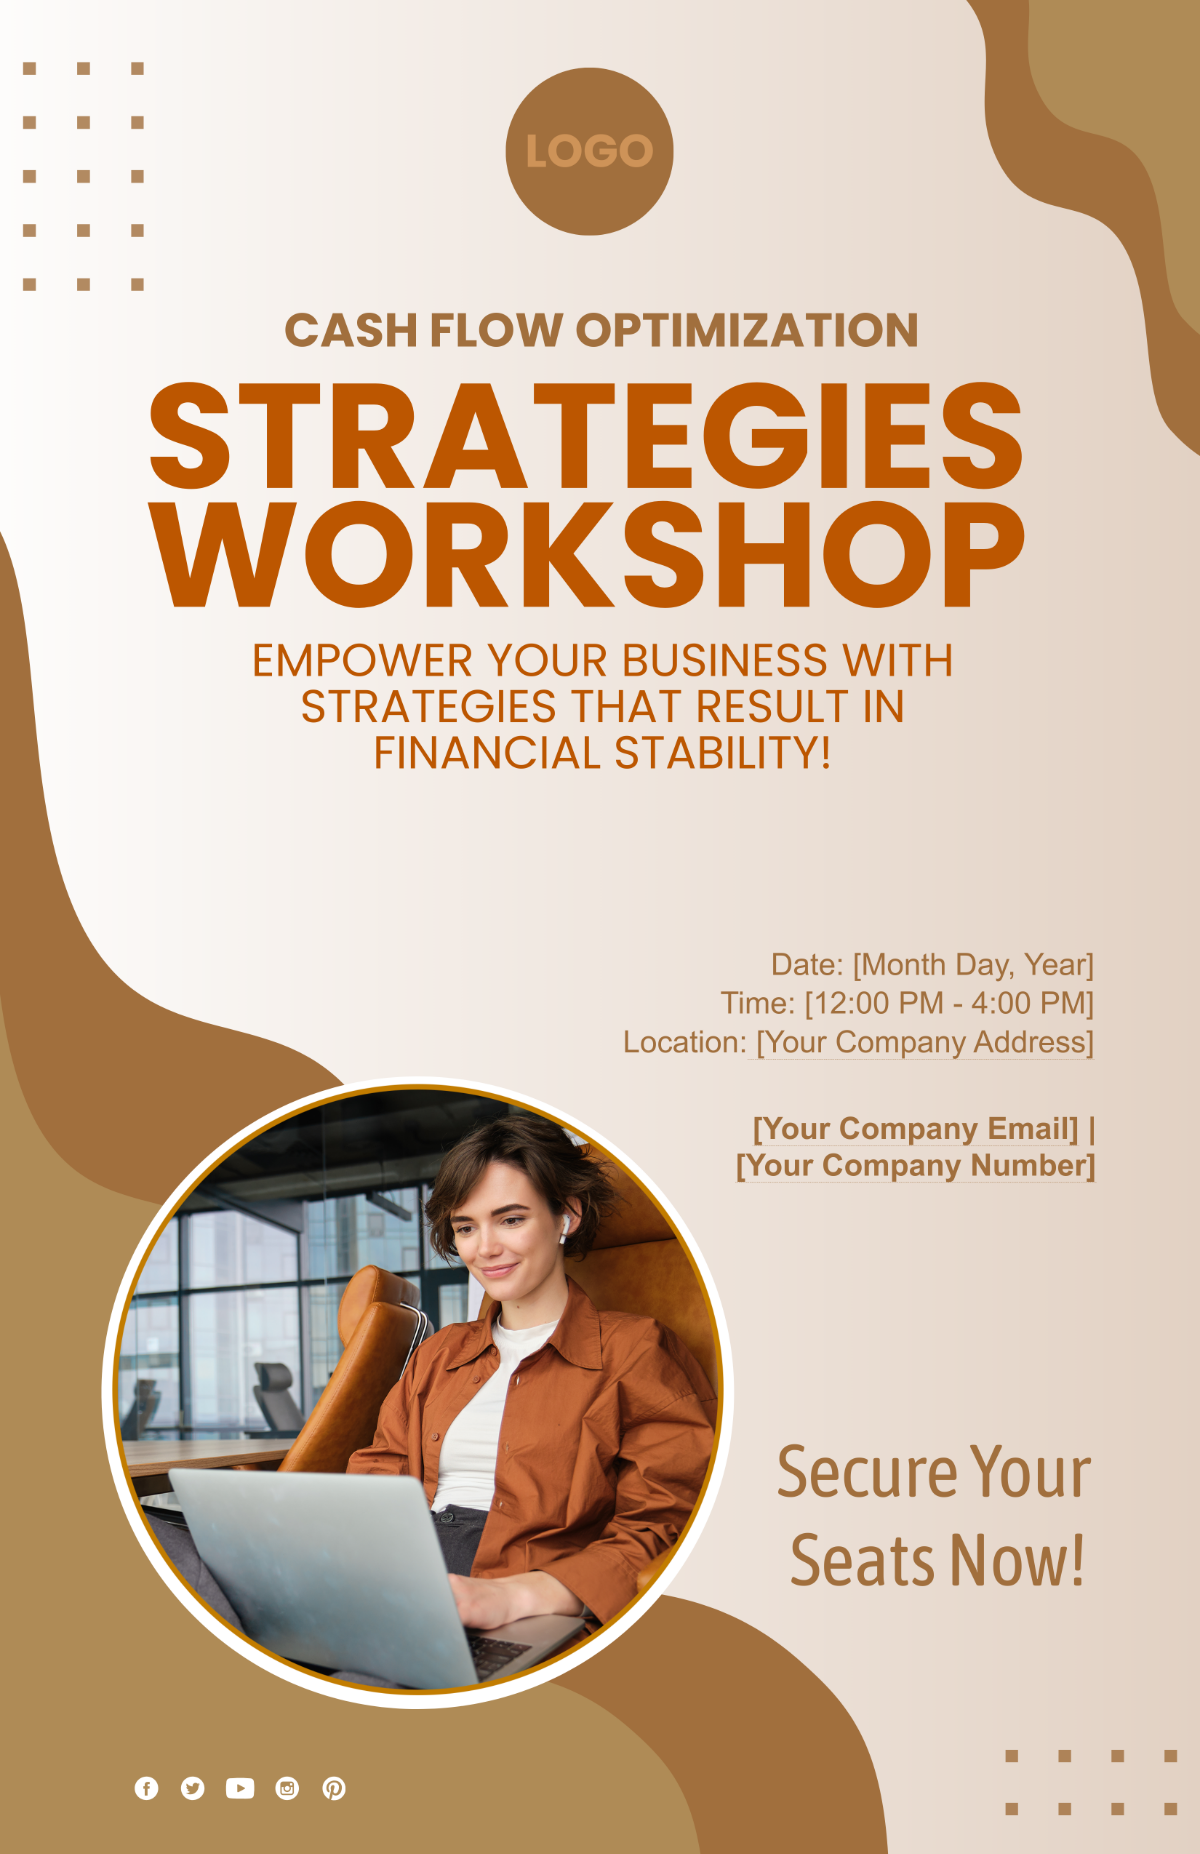 Cash Flow Optimization Strategies Workshop Poster Template